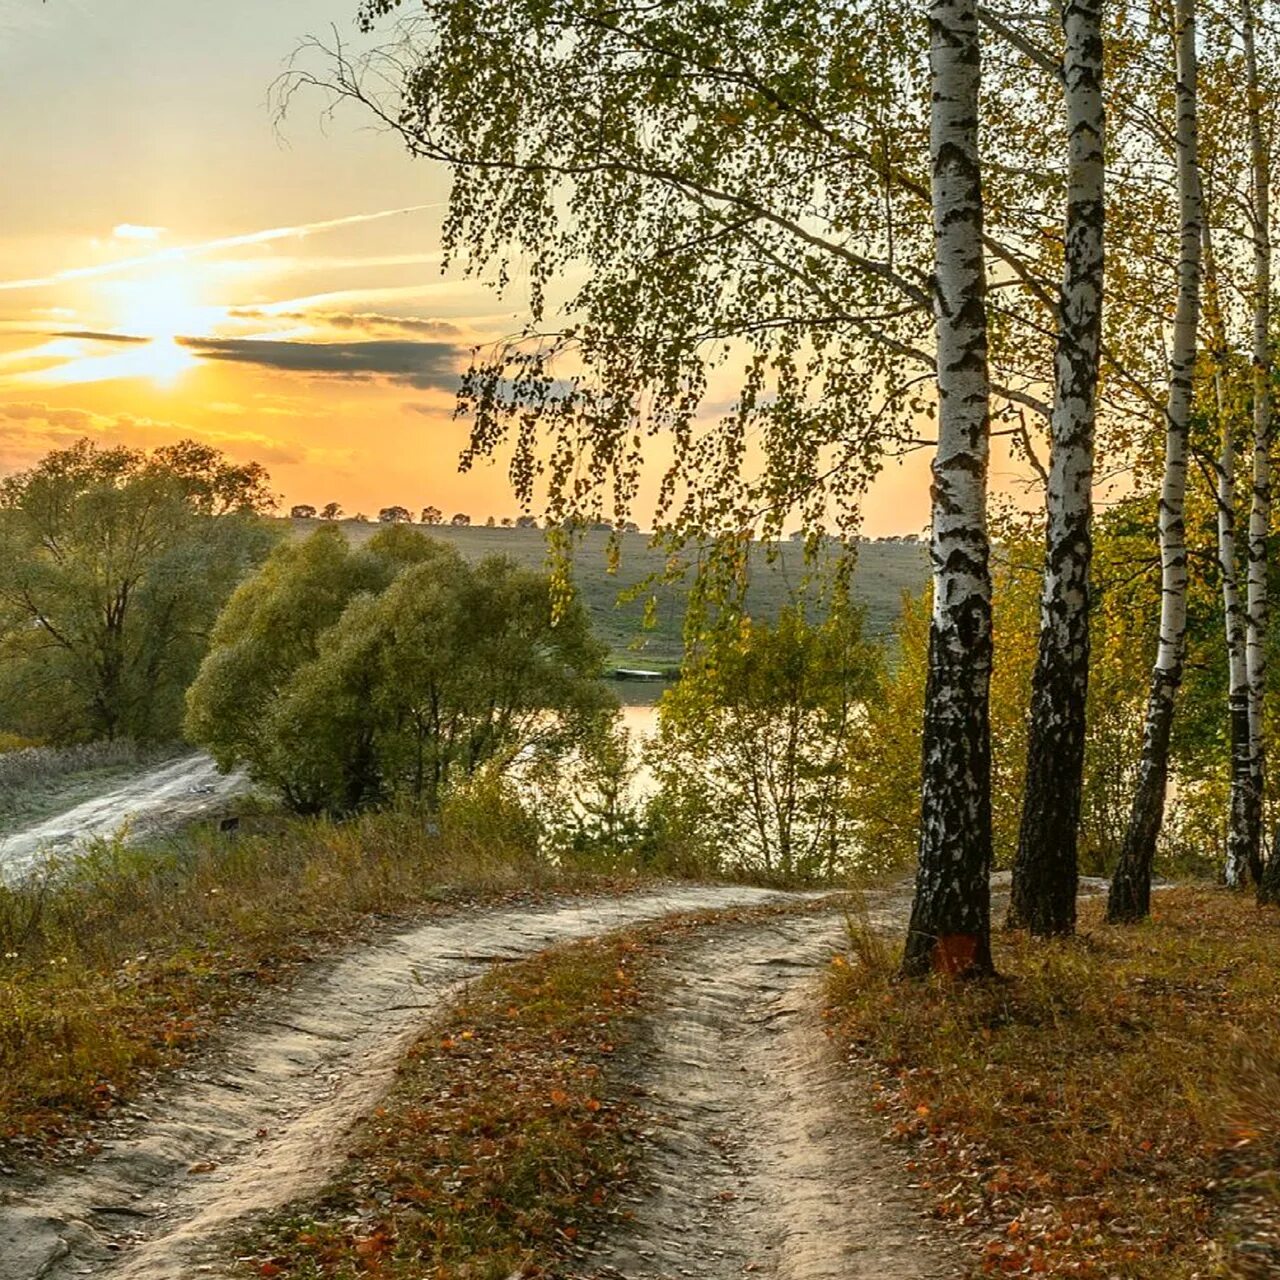 Две березки у дороги минус. Пейзаж с березками. Осень в России. Береза дорога пейзаж. Пейзаж с березой вертикальный.